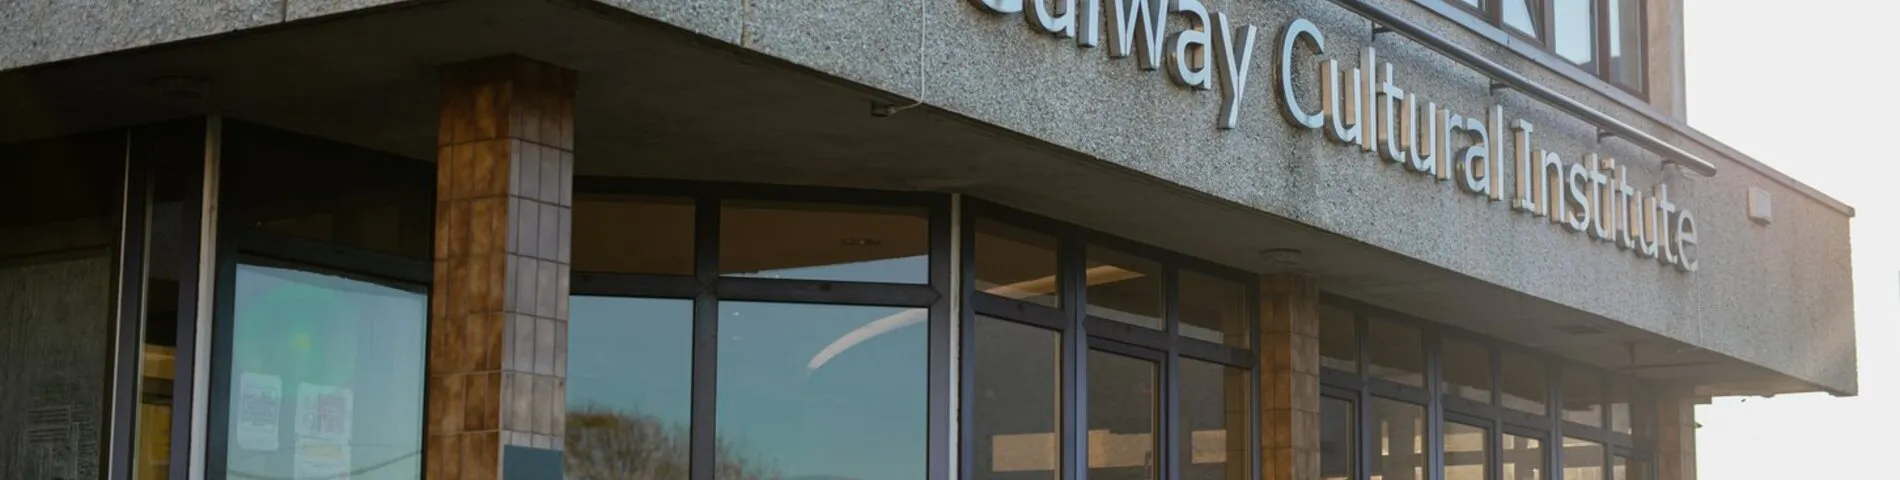 Galway Cultural Institute รูปภาพ 1